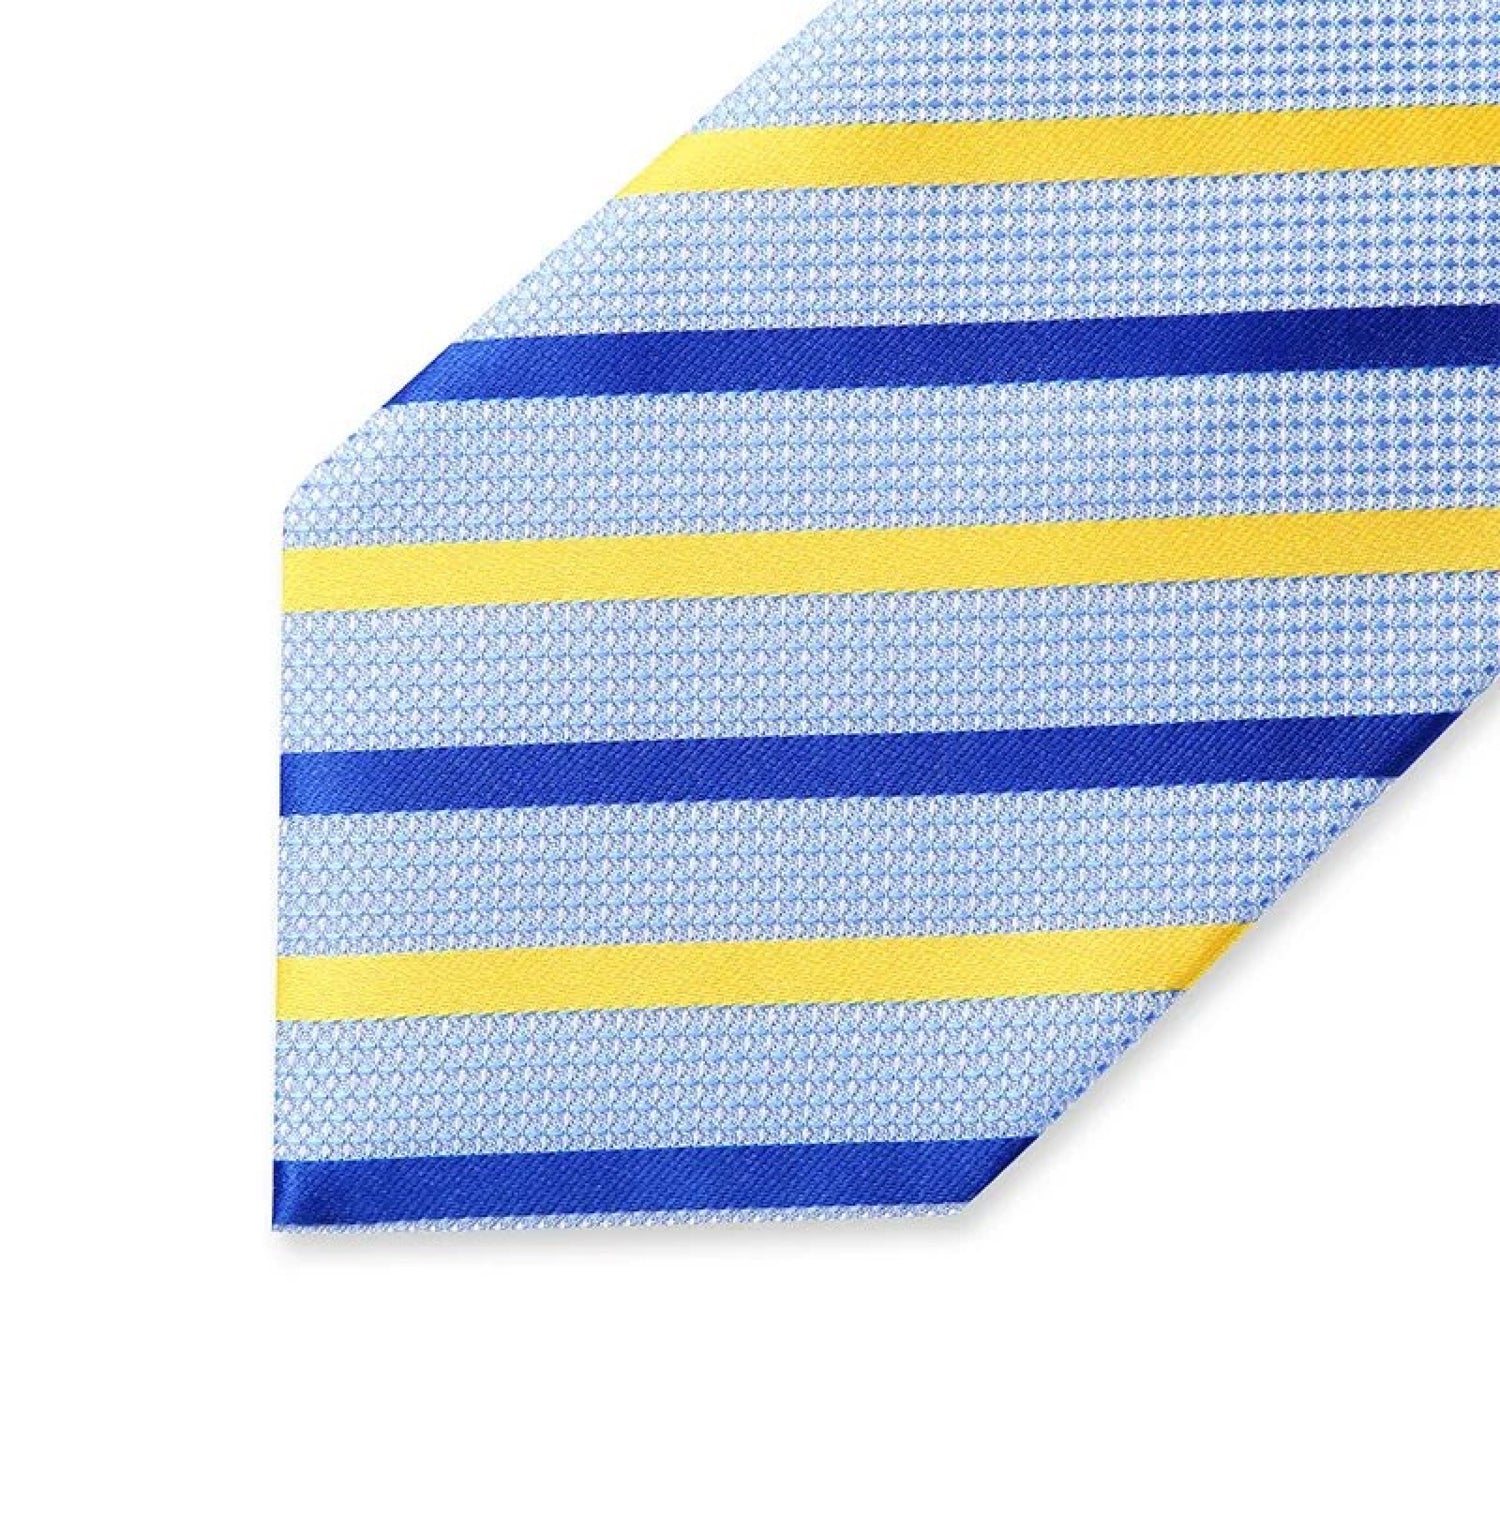 Tip of Tie: Light Blue, Blue, Yellow Stripe Tie